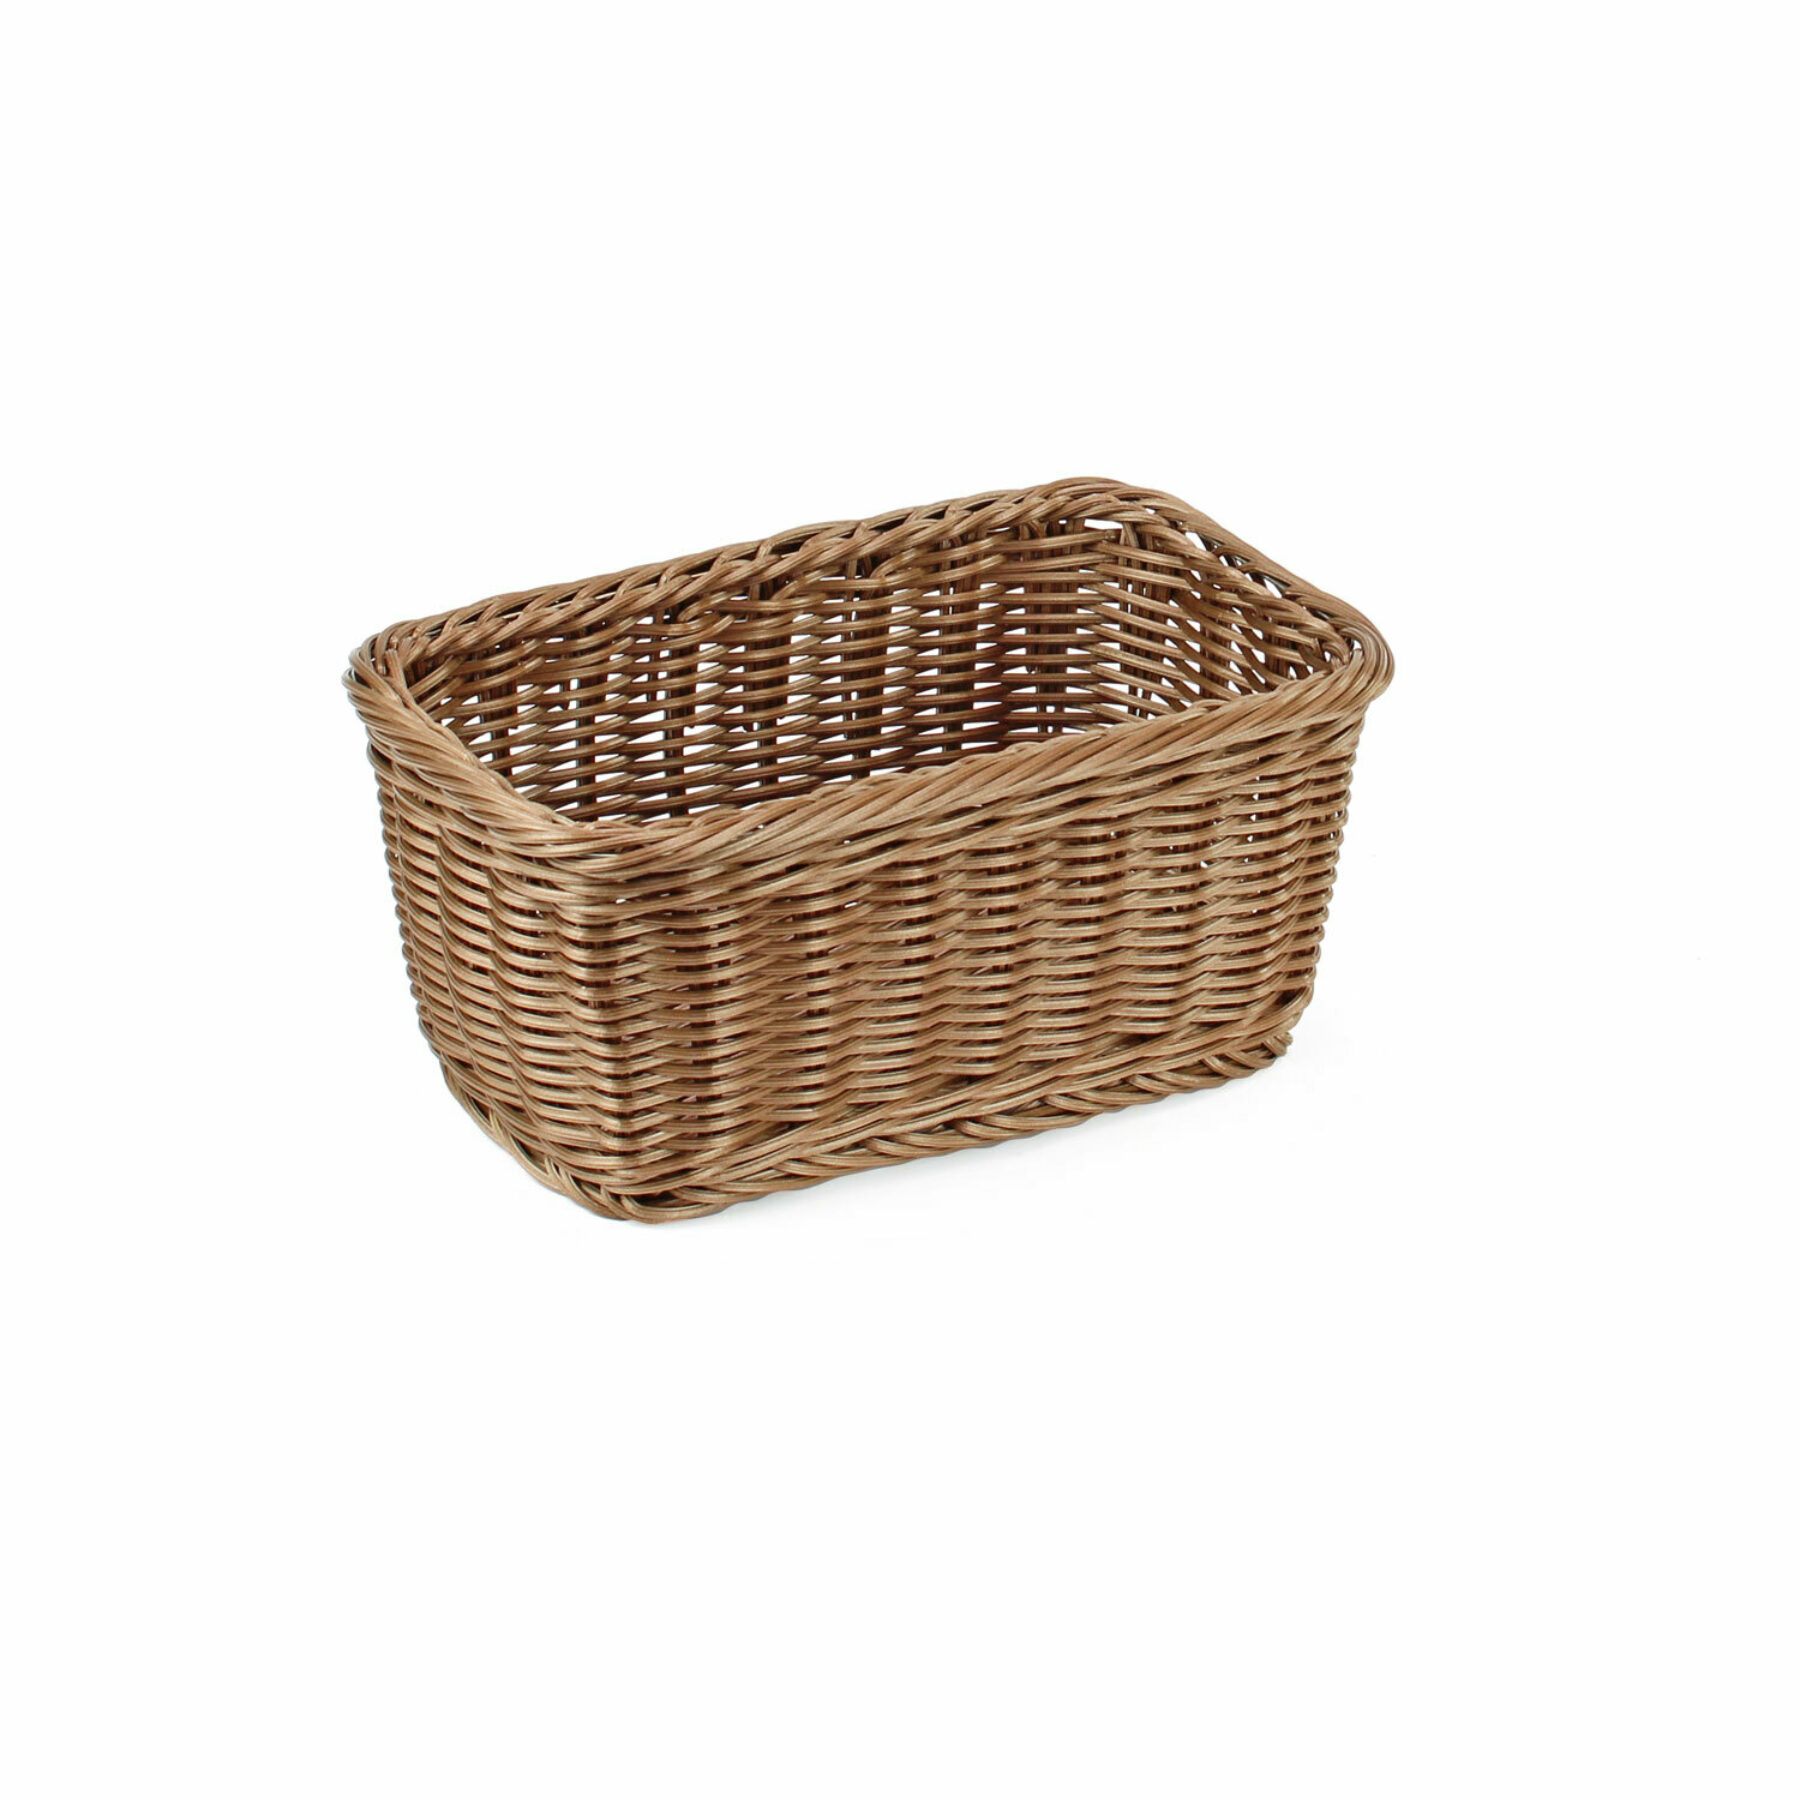 1/4 GN Deep Taupe Polywicker Basket